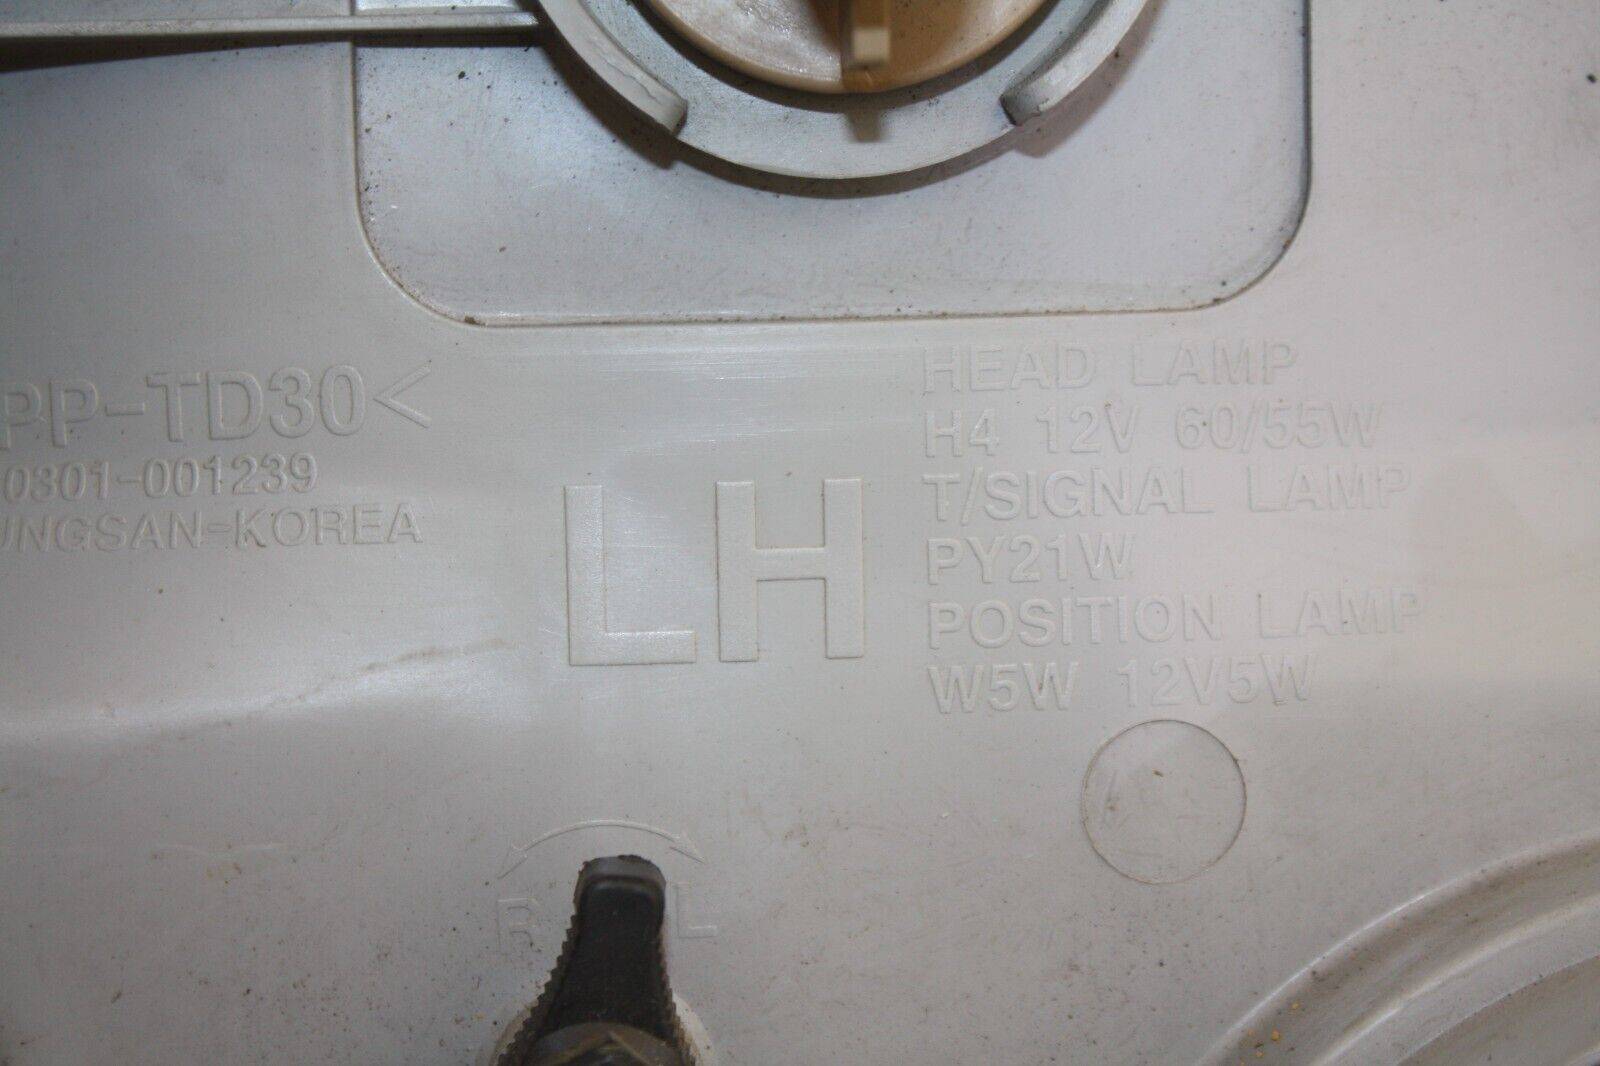 LDV-Maxus-Left-Side-Headlight-2004-TO-2009-0301-001239-Genuine-176139530677-8